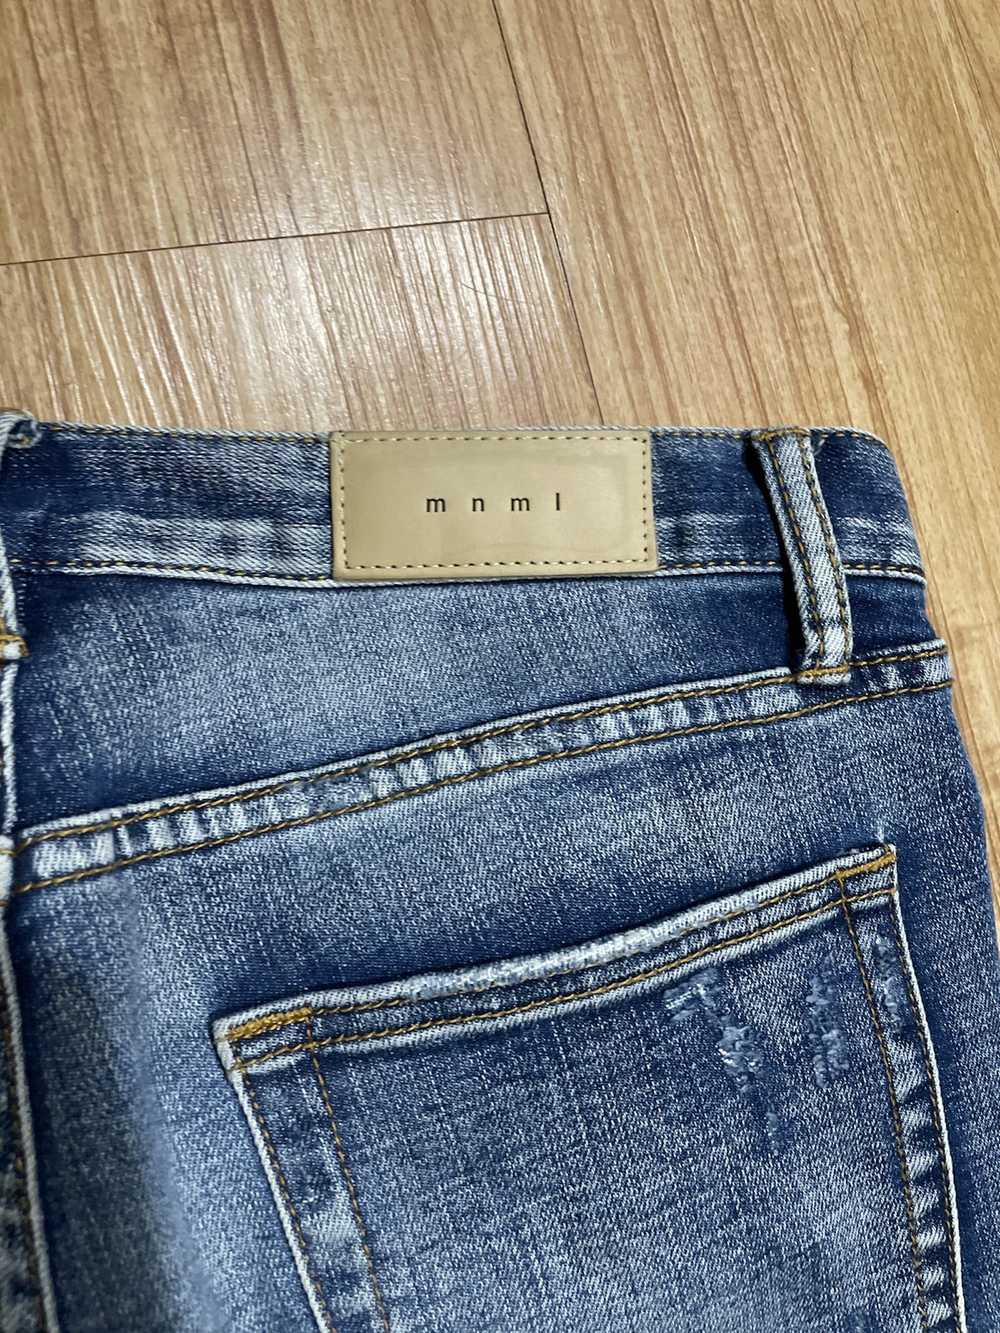 MNML Mnml blue slim zip leg jeans - image 6